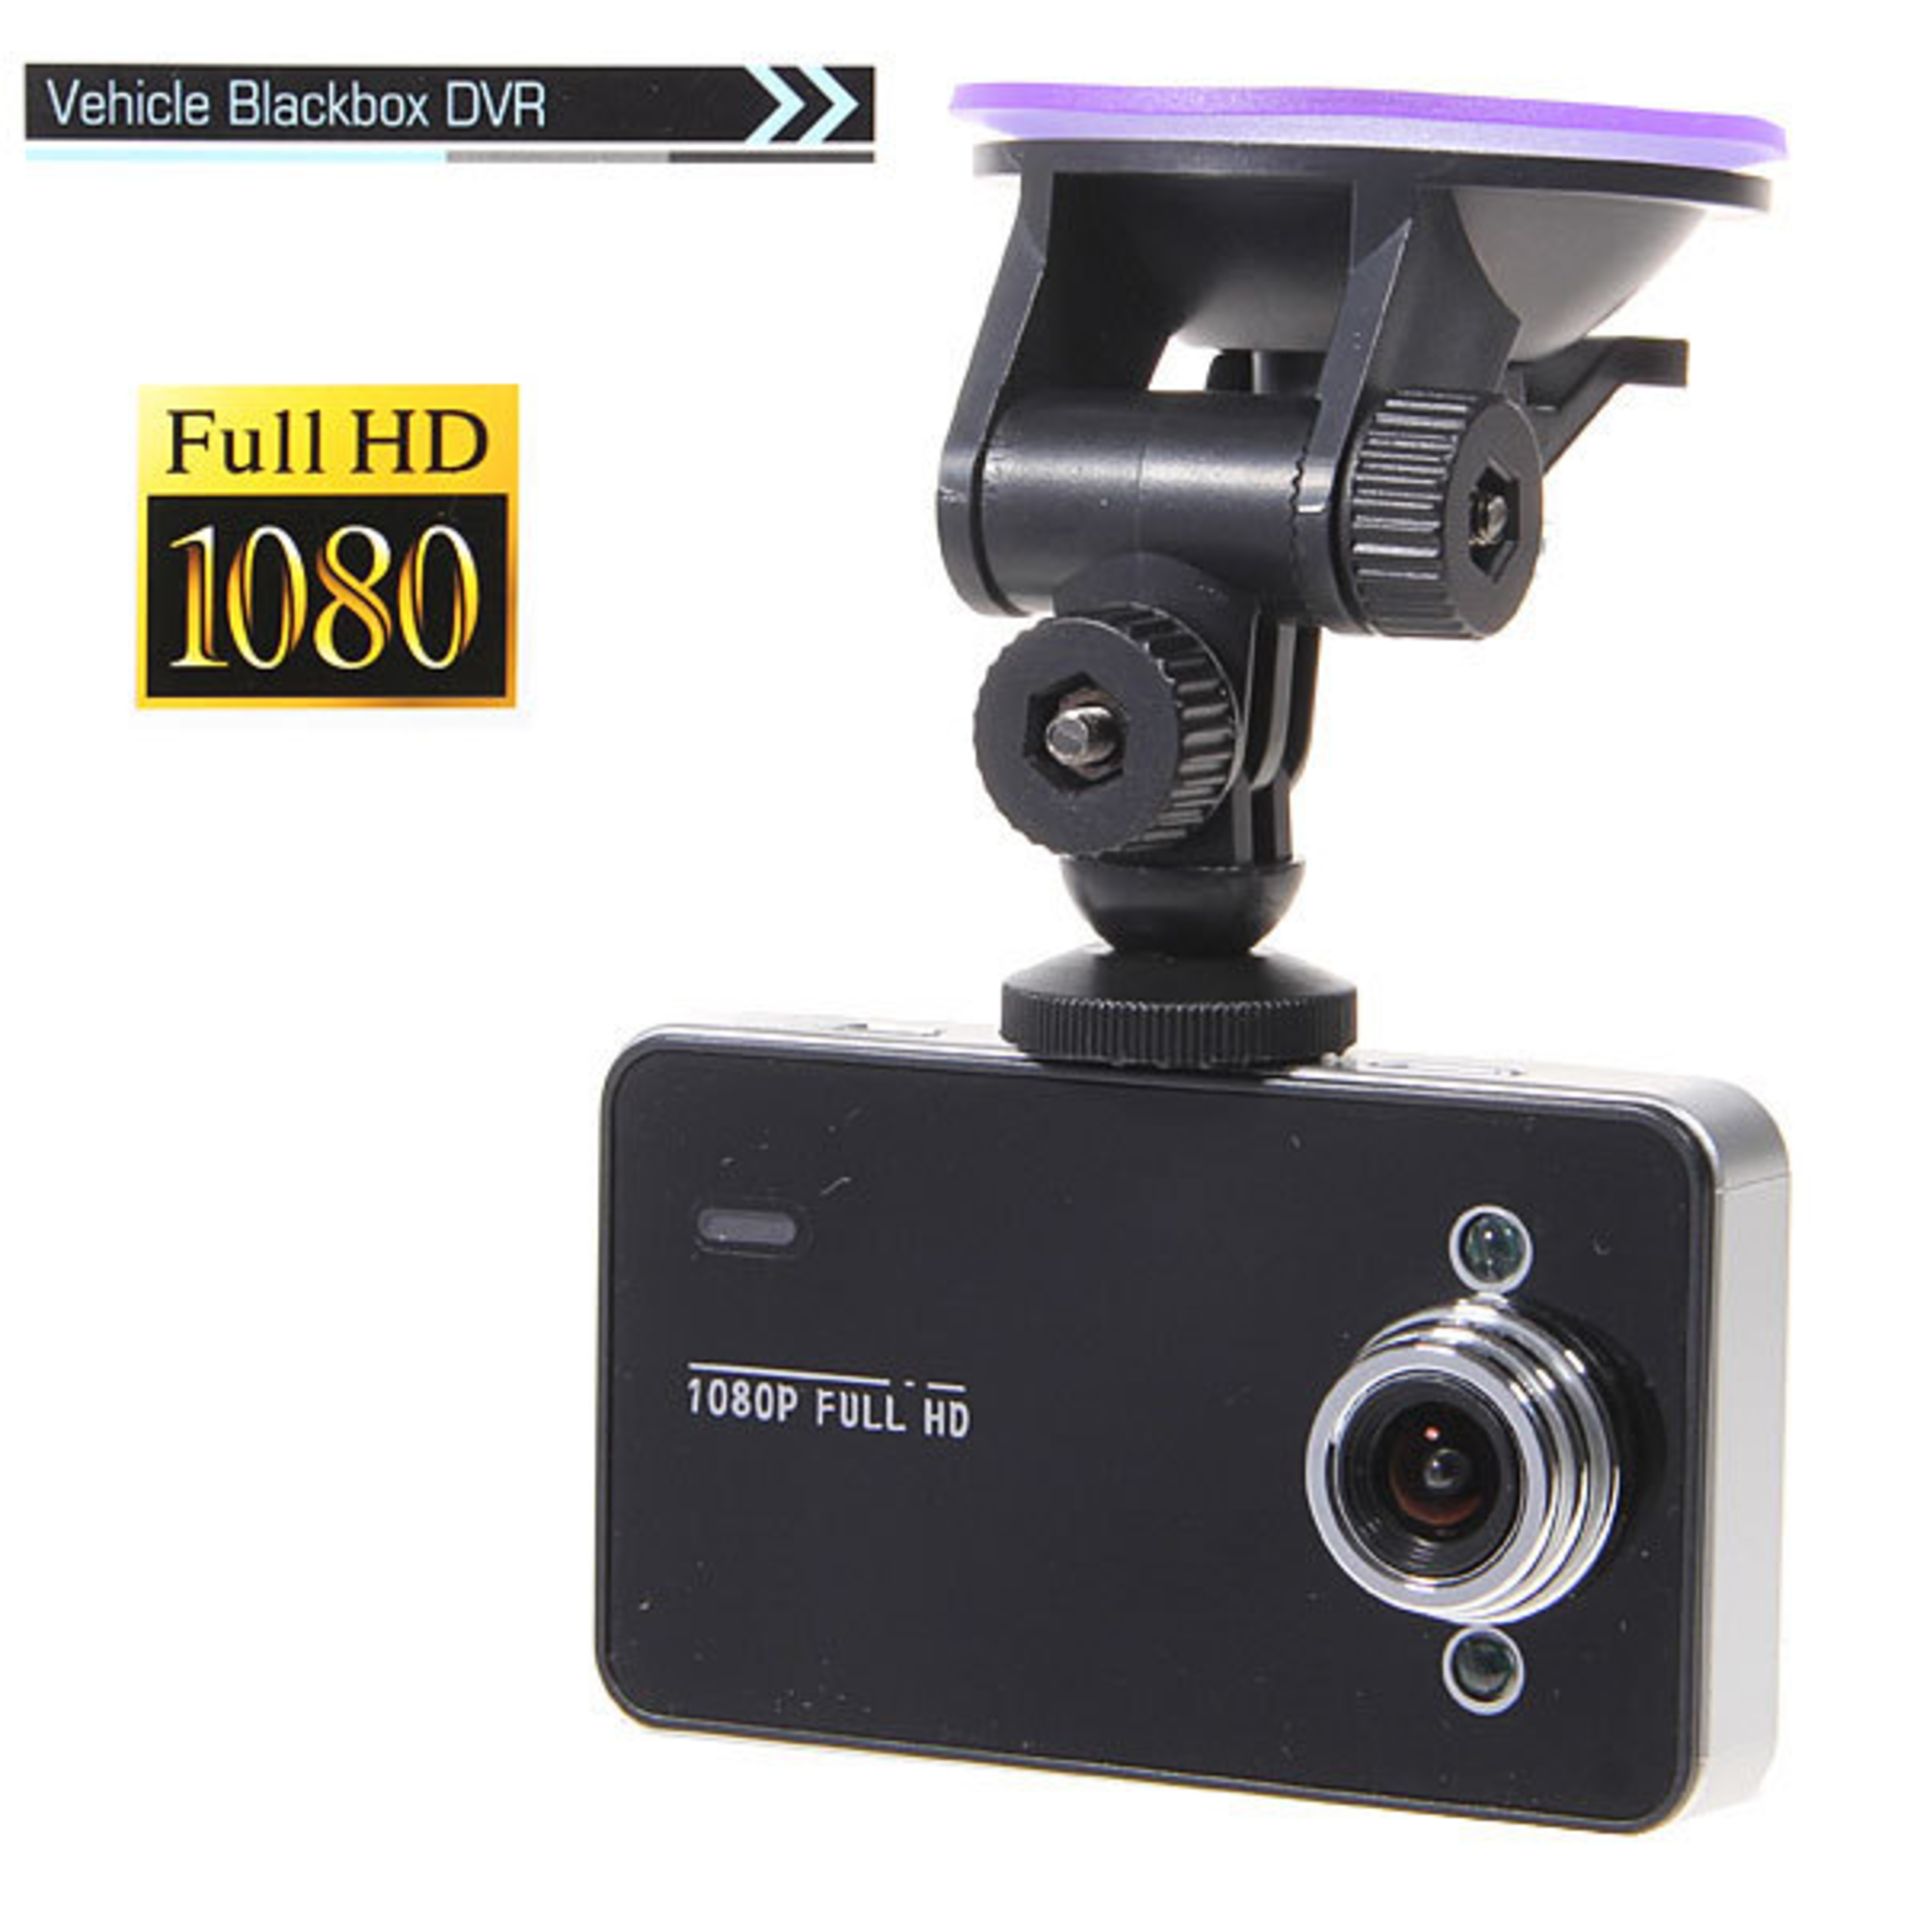 + VAT Brand New Car Camera Blackbox DVR With Motion Detecting HD/DVR 1080p